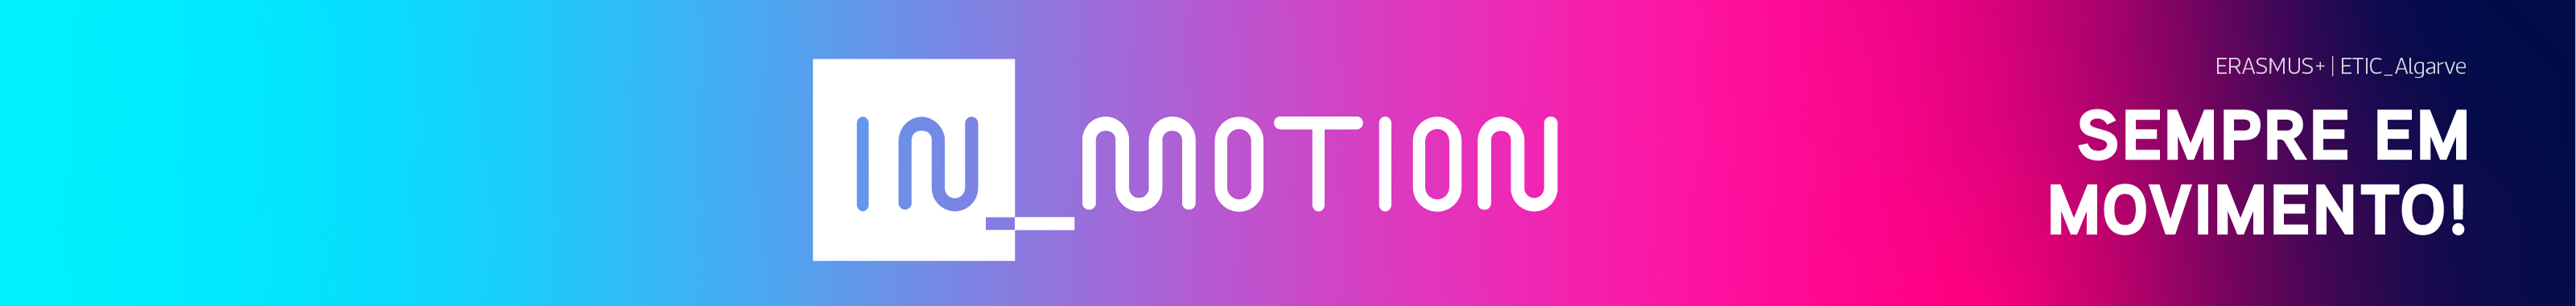 Banner de perfil de ETIC_Algarve In_Motion